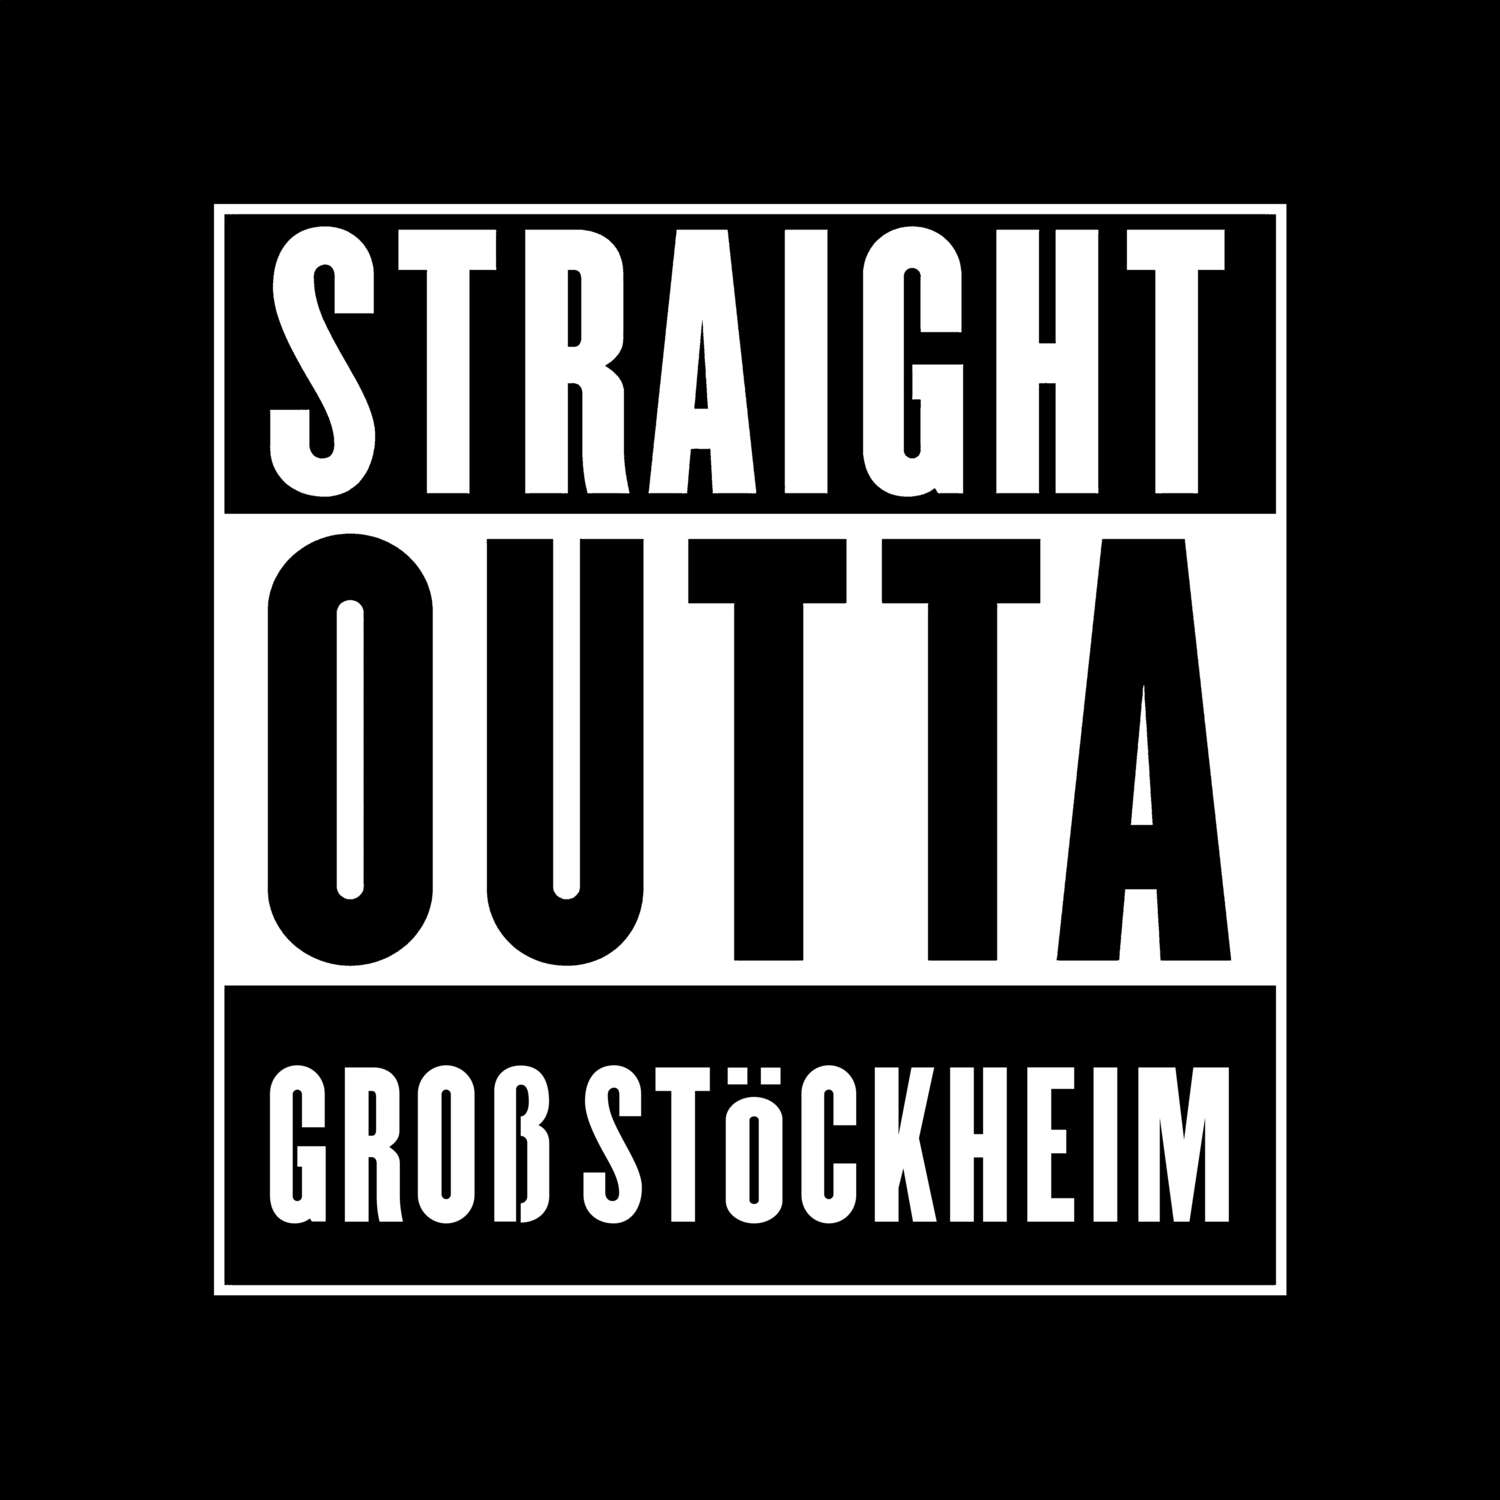 Groß Stöckheim T-Shirt »Straight Outta«